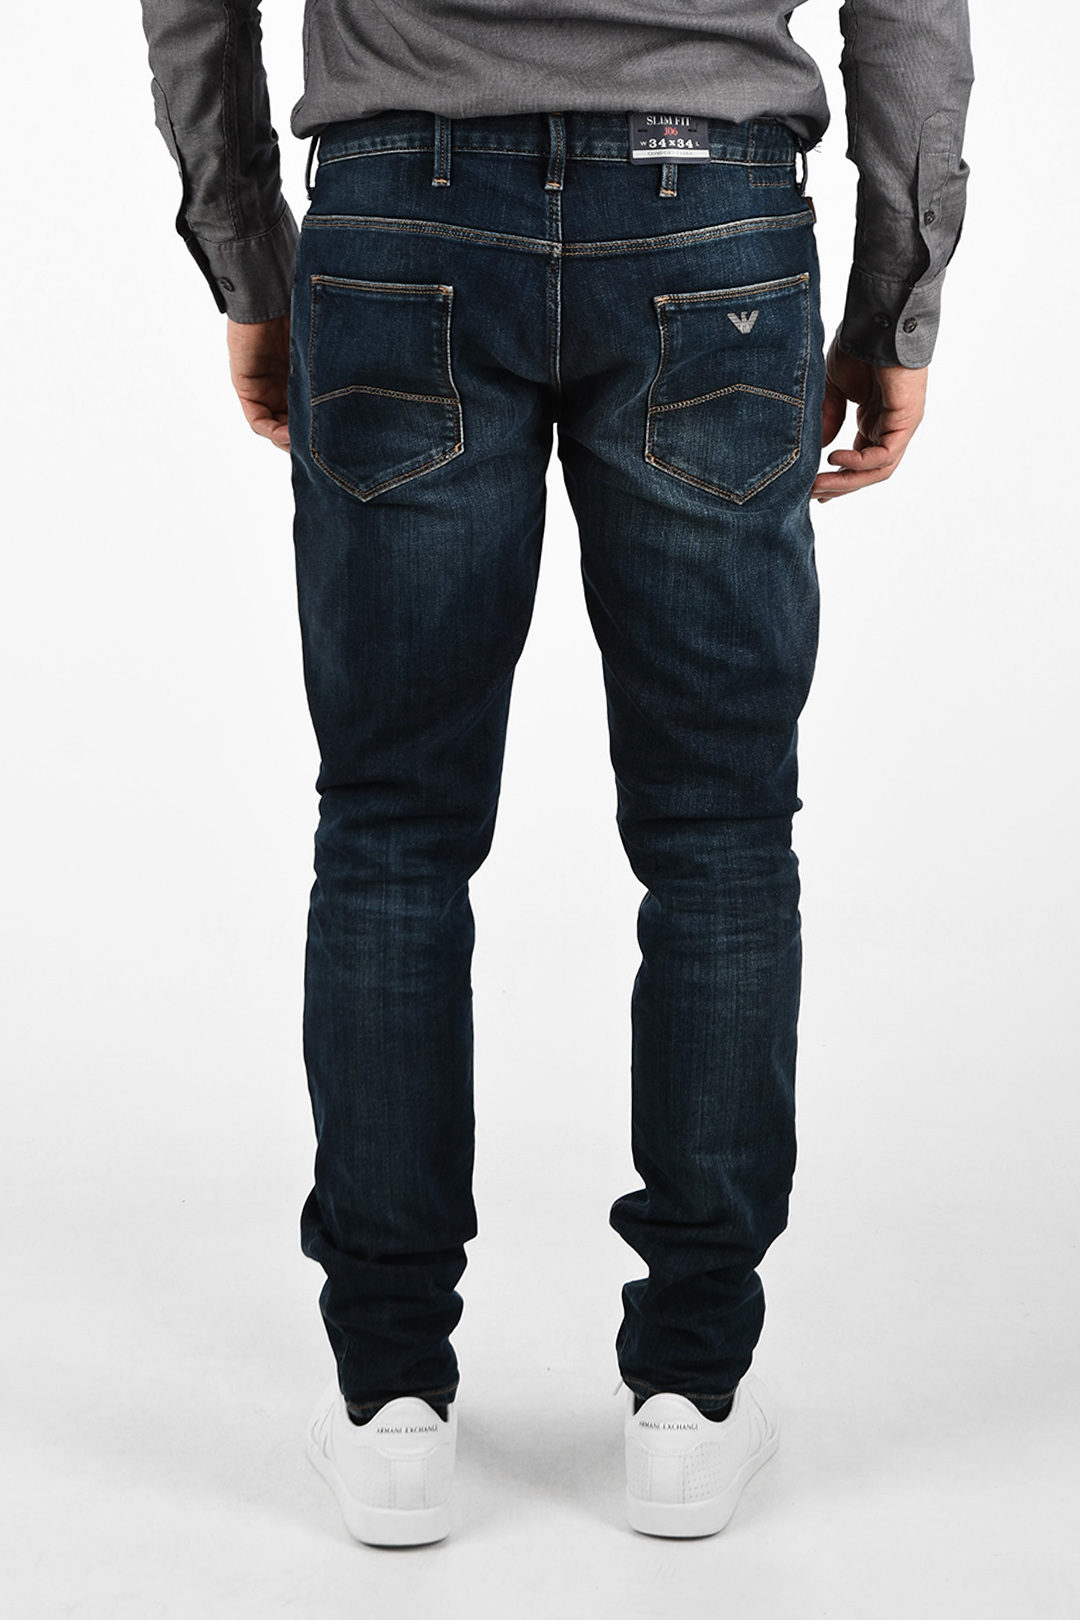 doolhof Het beste klasse Armani ARMANI JEANS 17cm Low Waist Slim Fit J06 Jeans men - Glamood Outlet